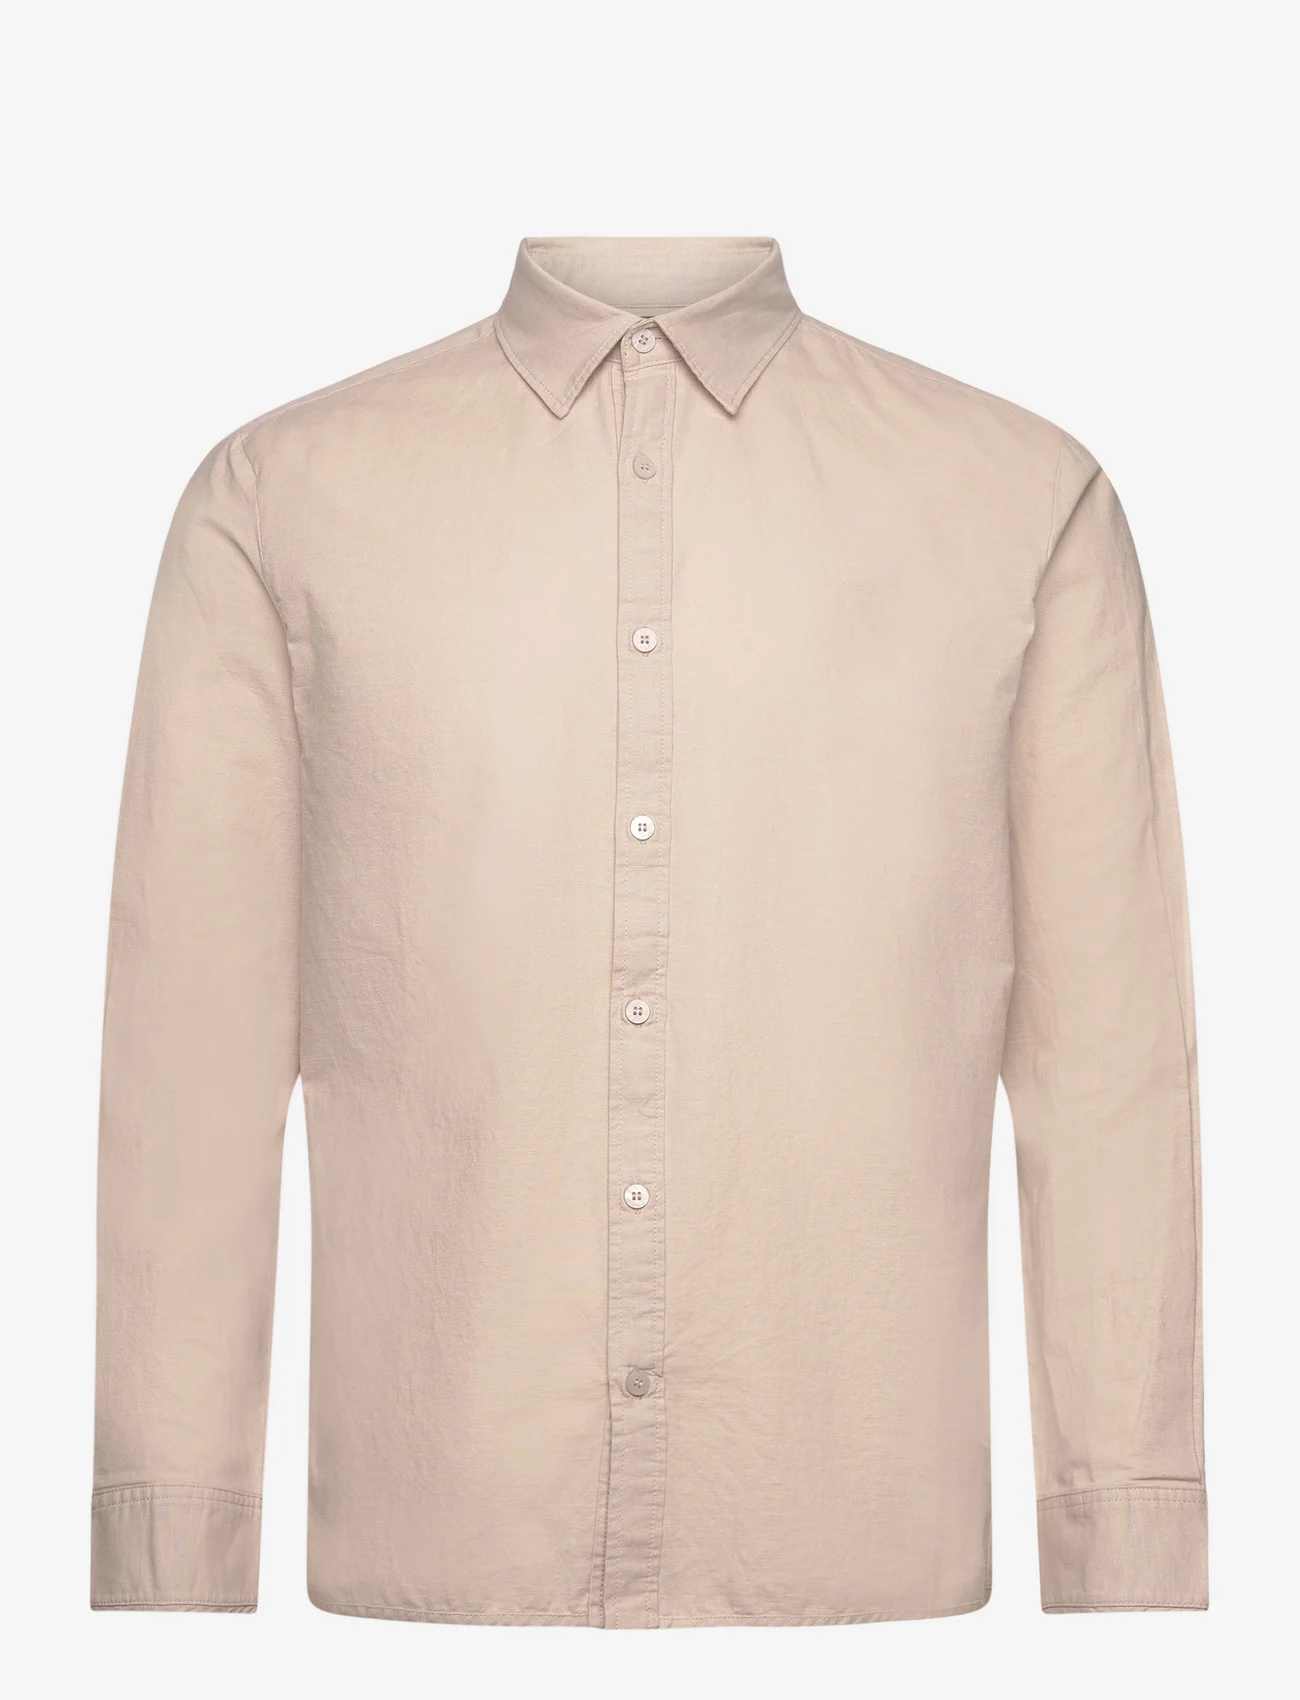 Bruuns Bazaar - LinowBBGiil LS shirt - casual shirts - irish cream - 0